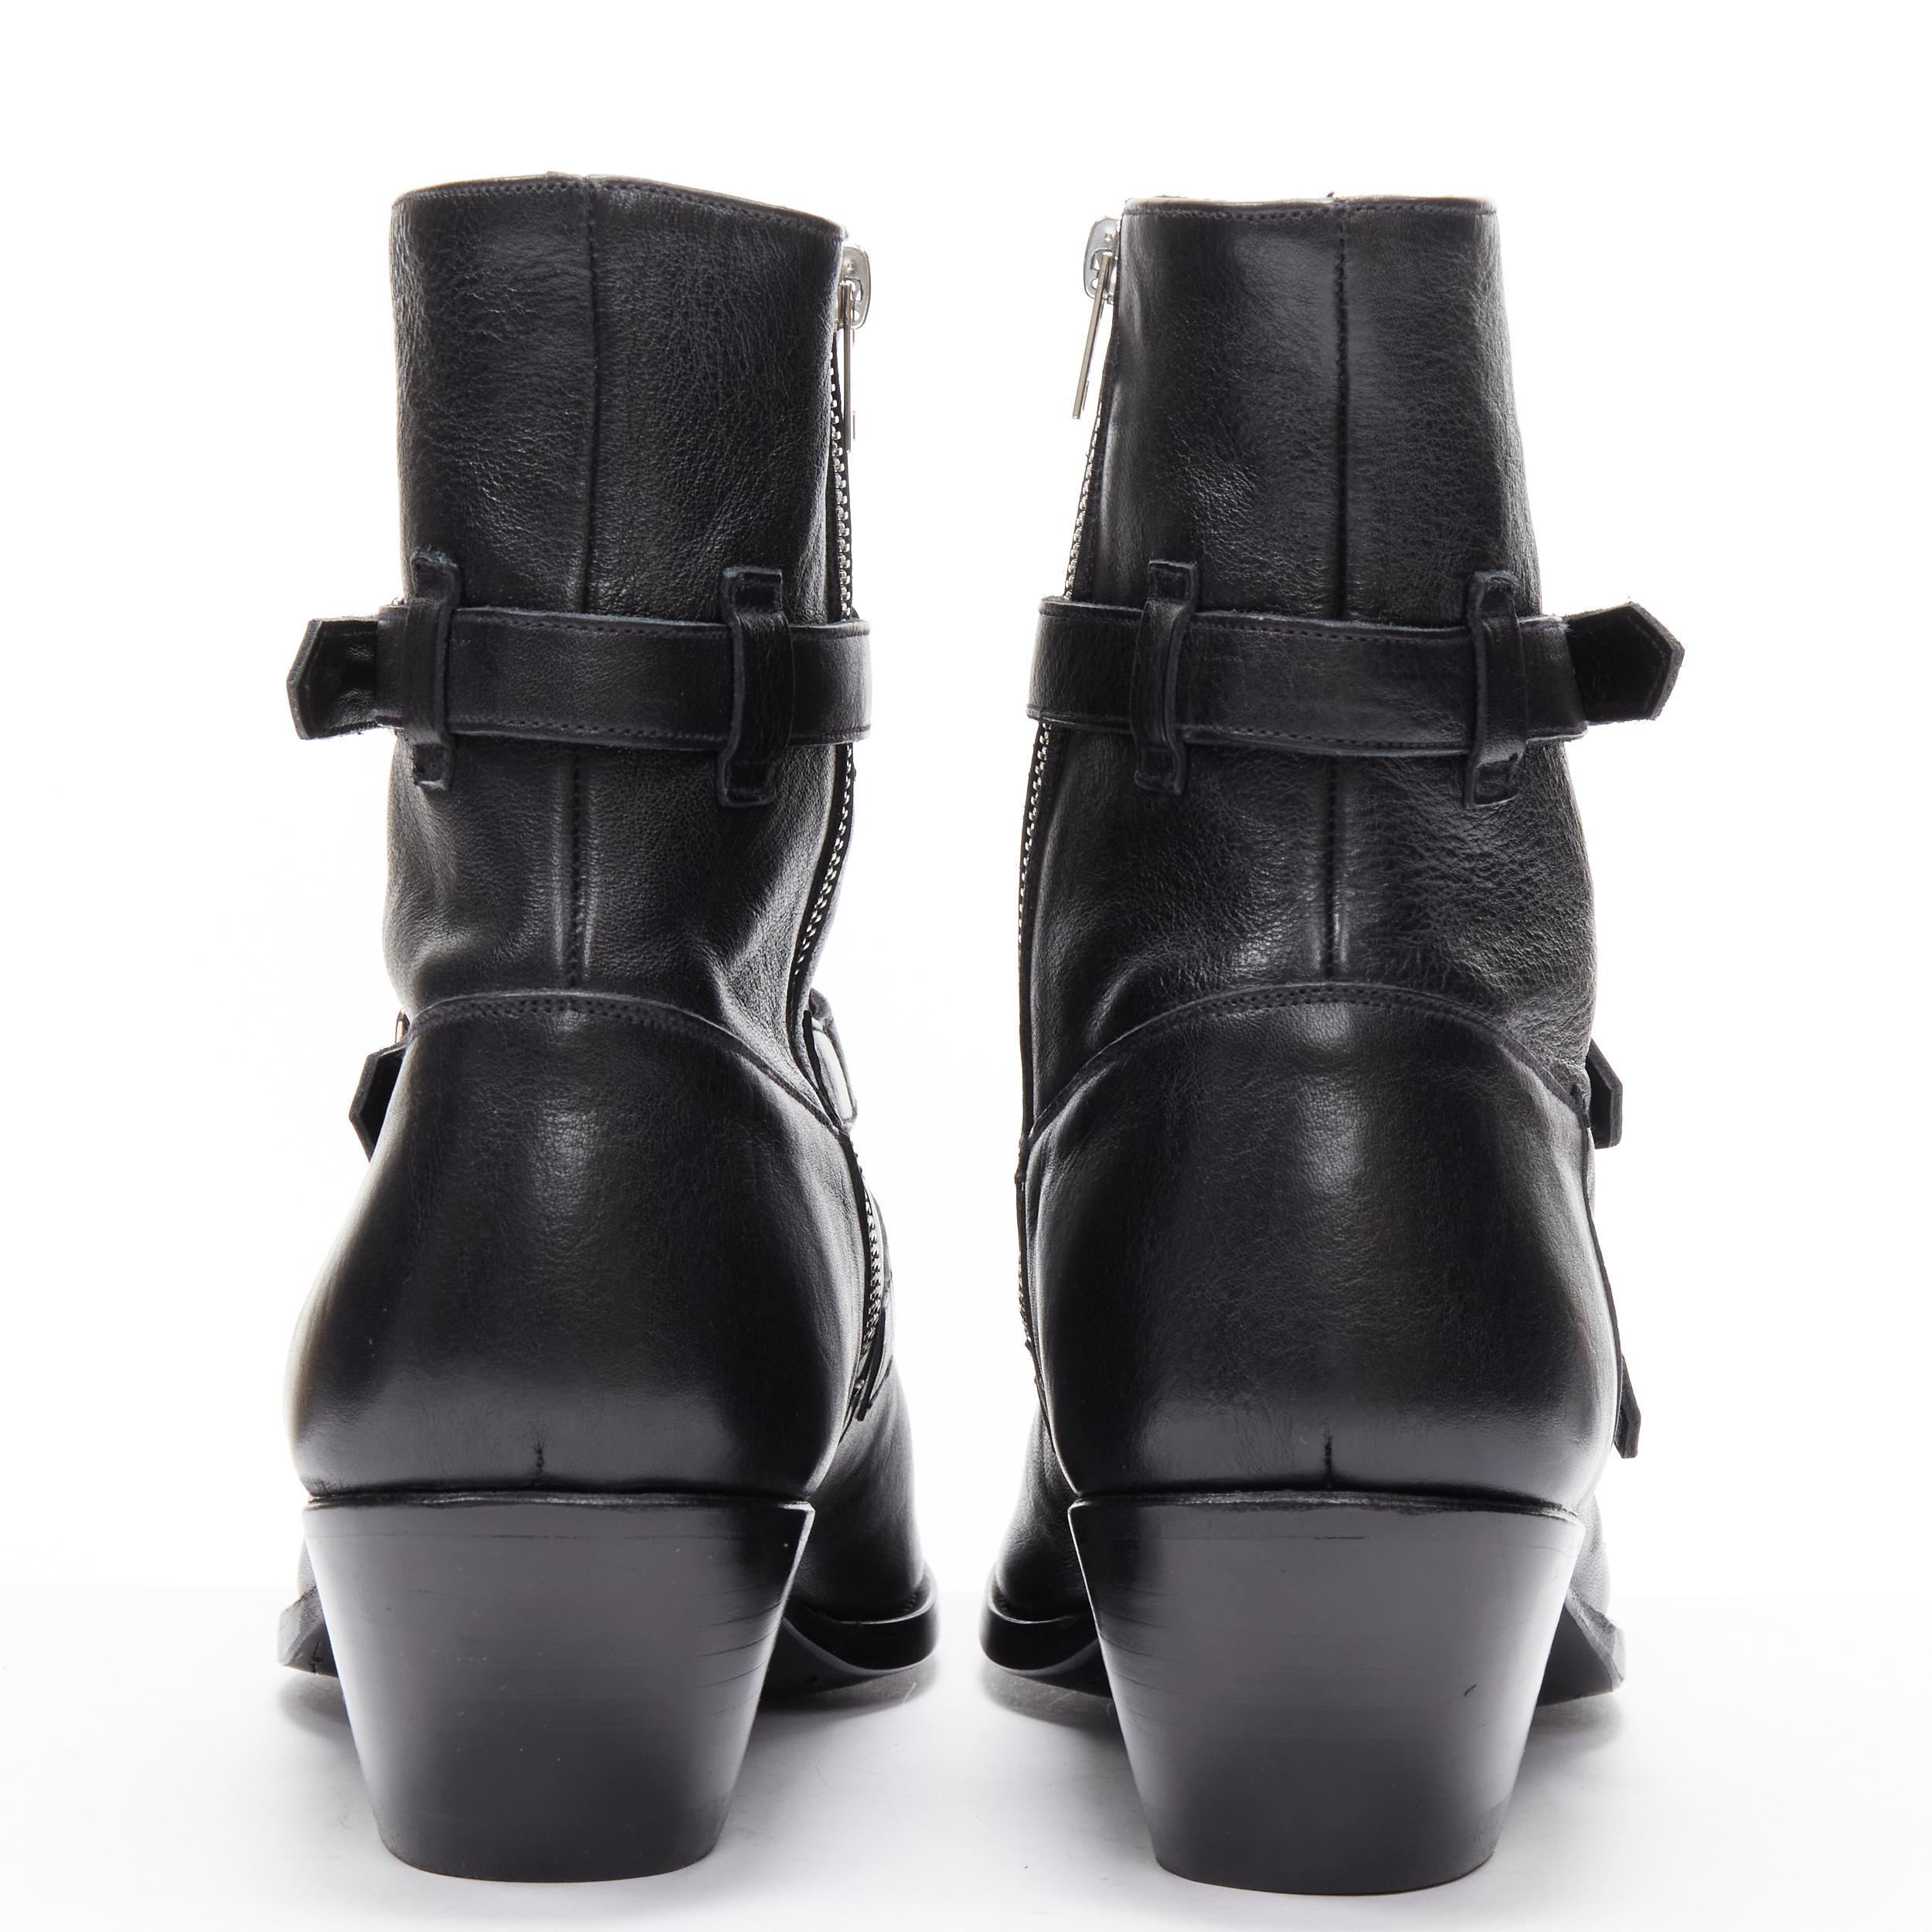 Black new CELINE Hedi Slimane 2019 Berlin black leather buckle western ankle boot EU44